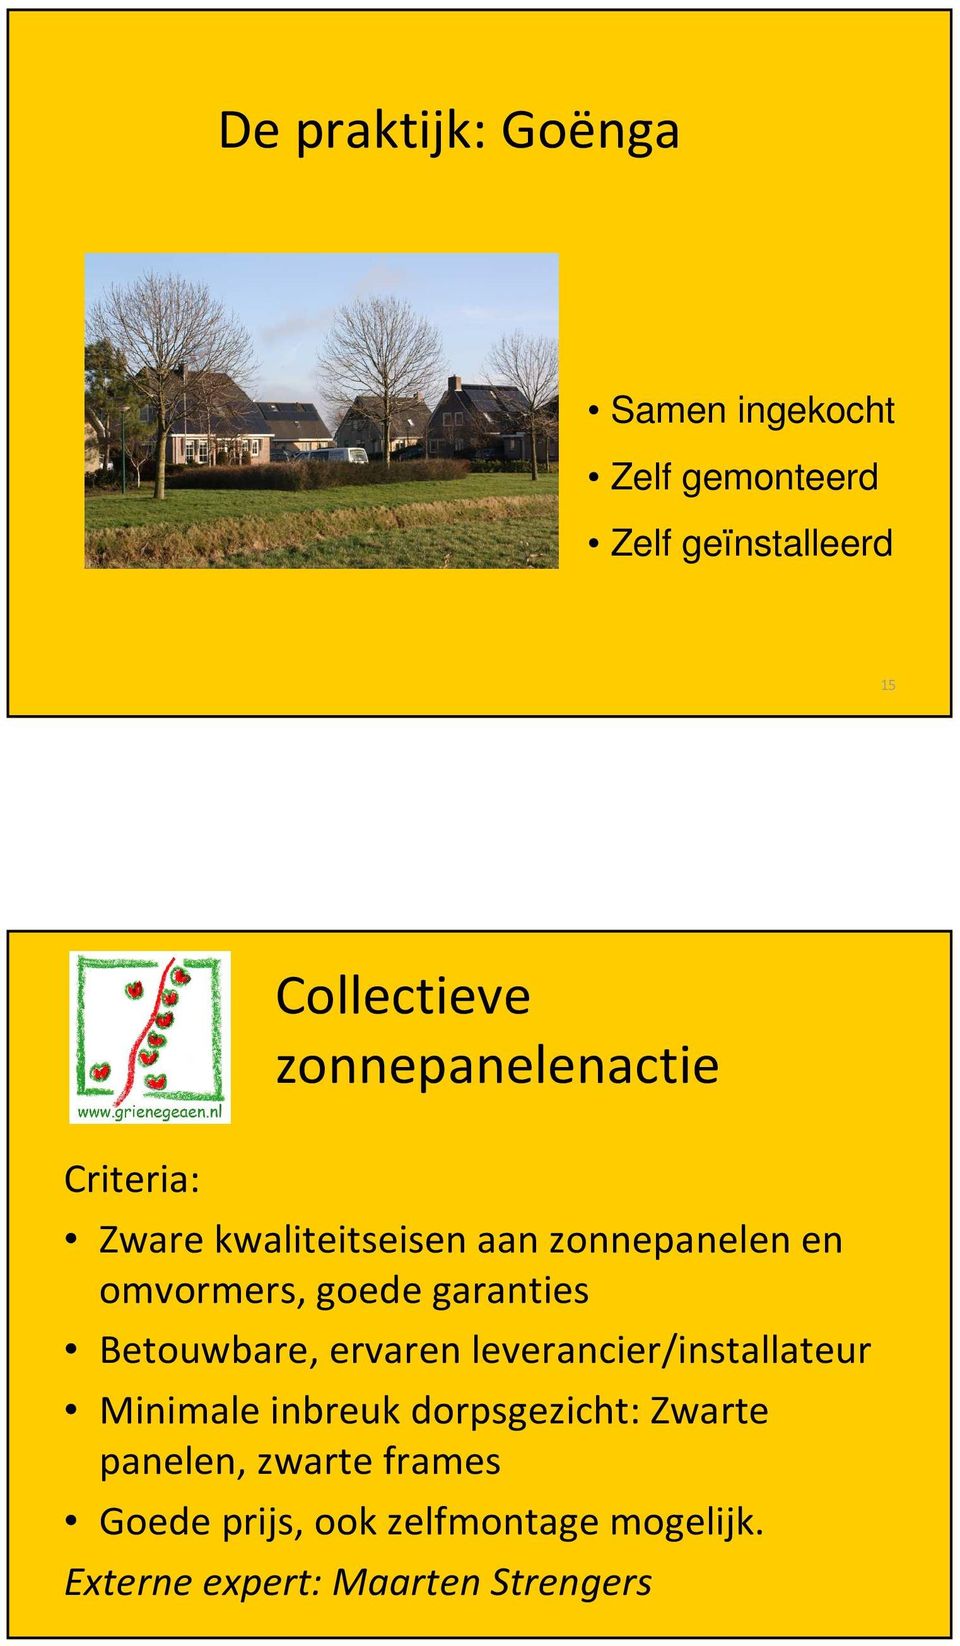 garanties Betouwbare, ervaren leverancier/installateur Minimale inbreuk dorpsgezicht: